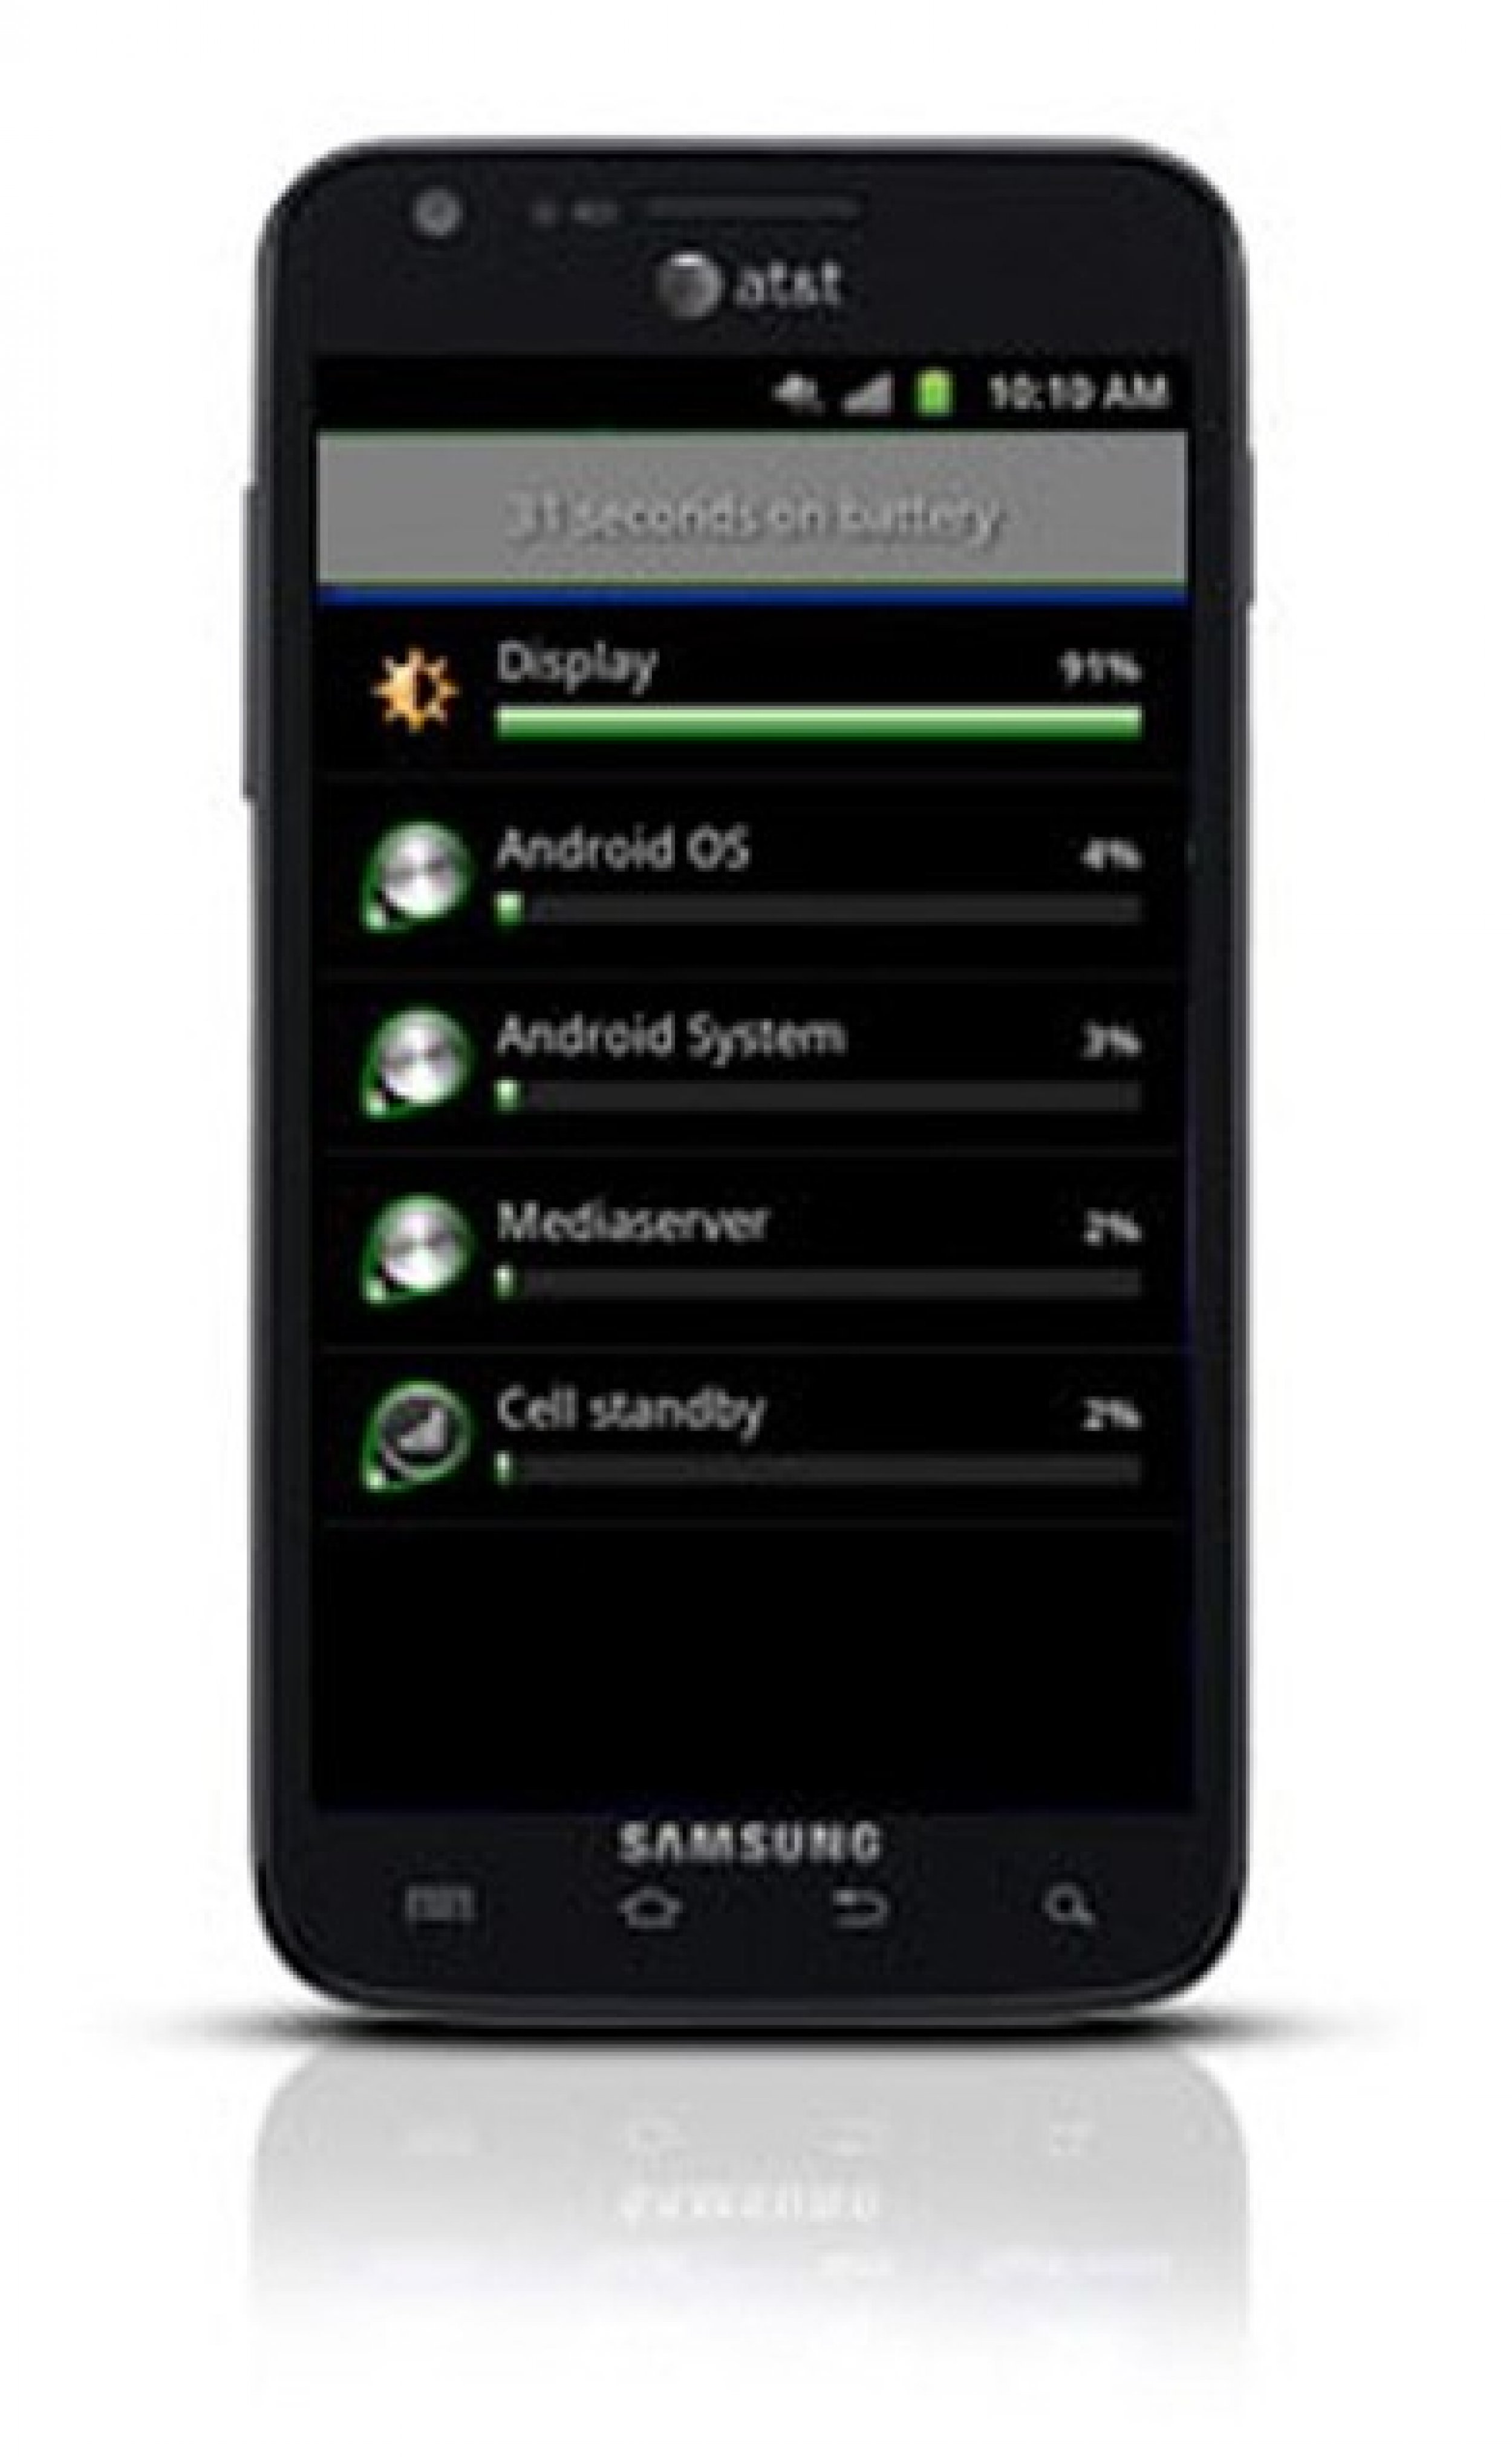 Samsung Galaxy S2 Skyrocket